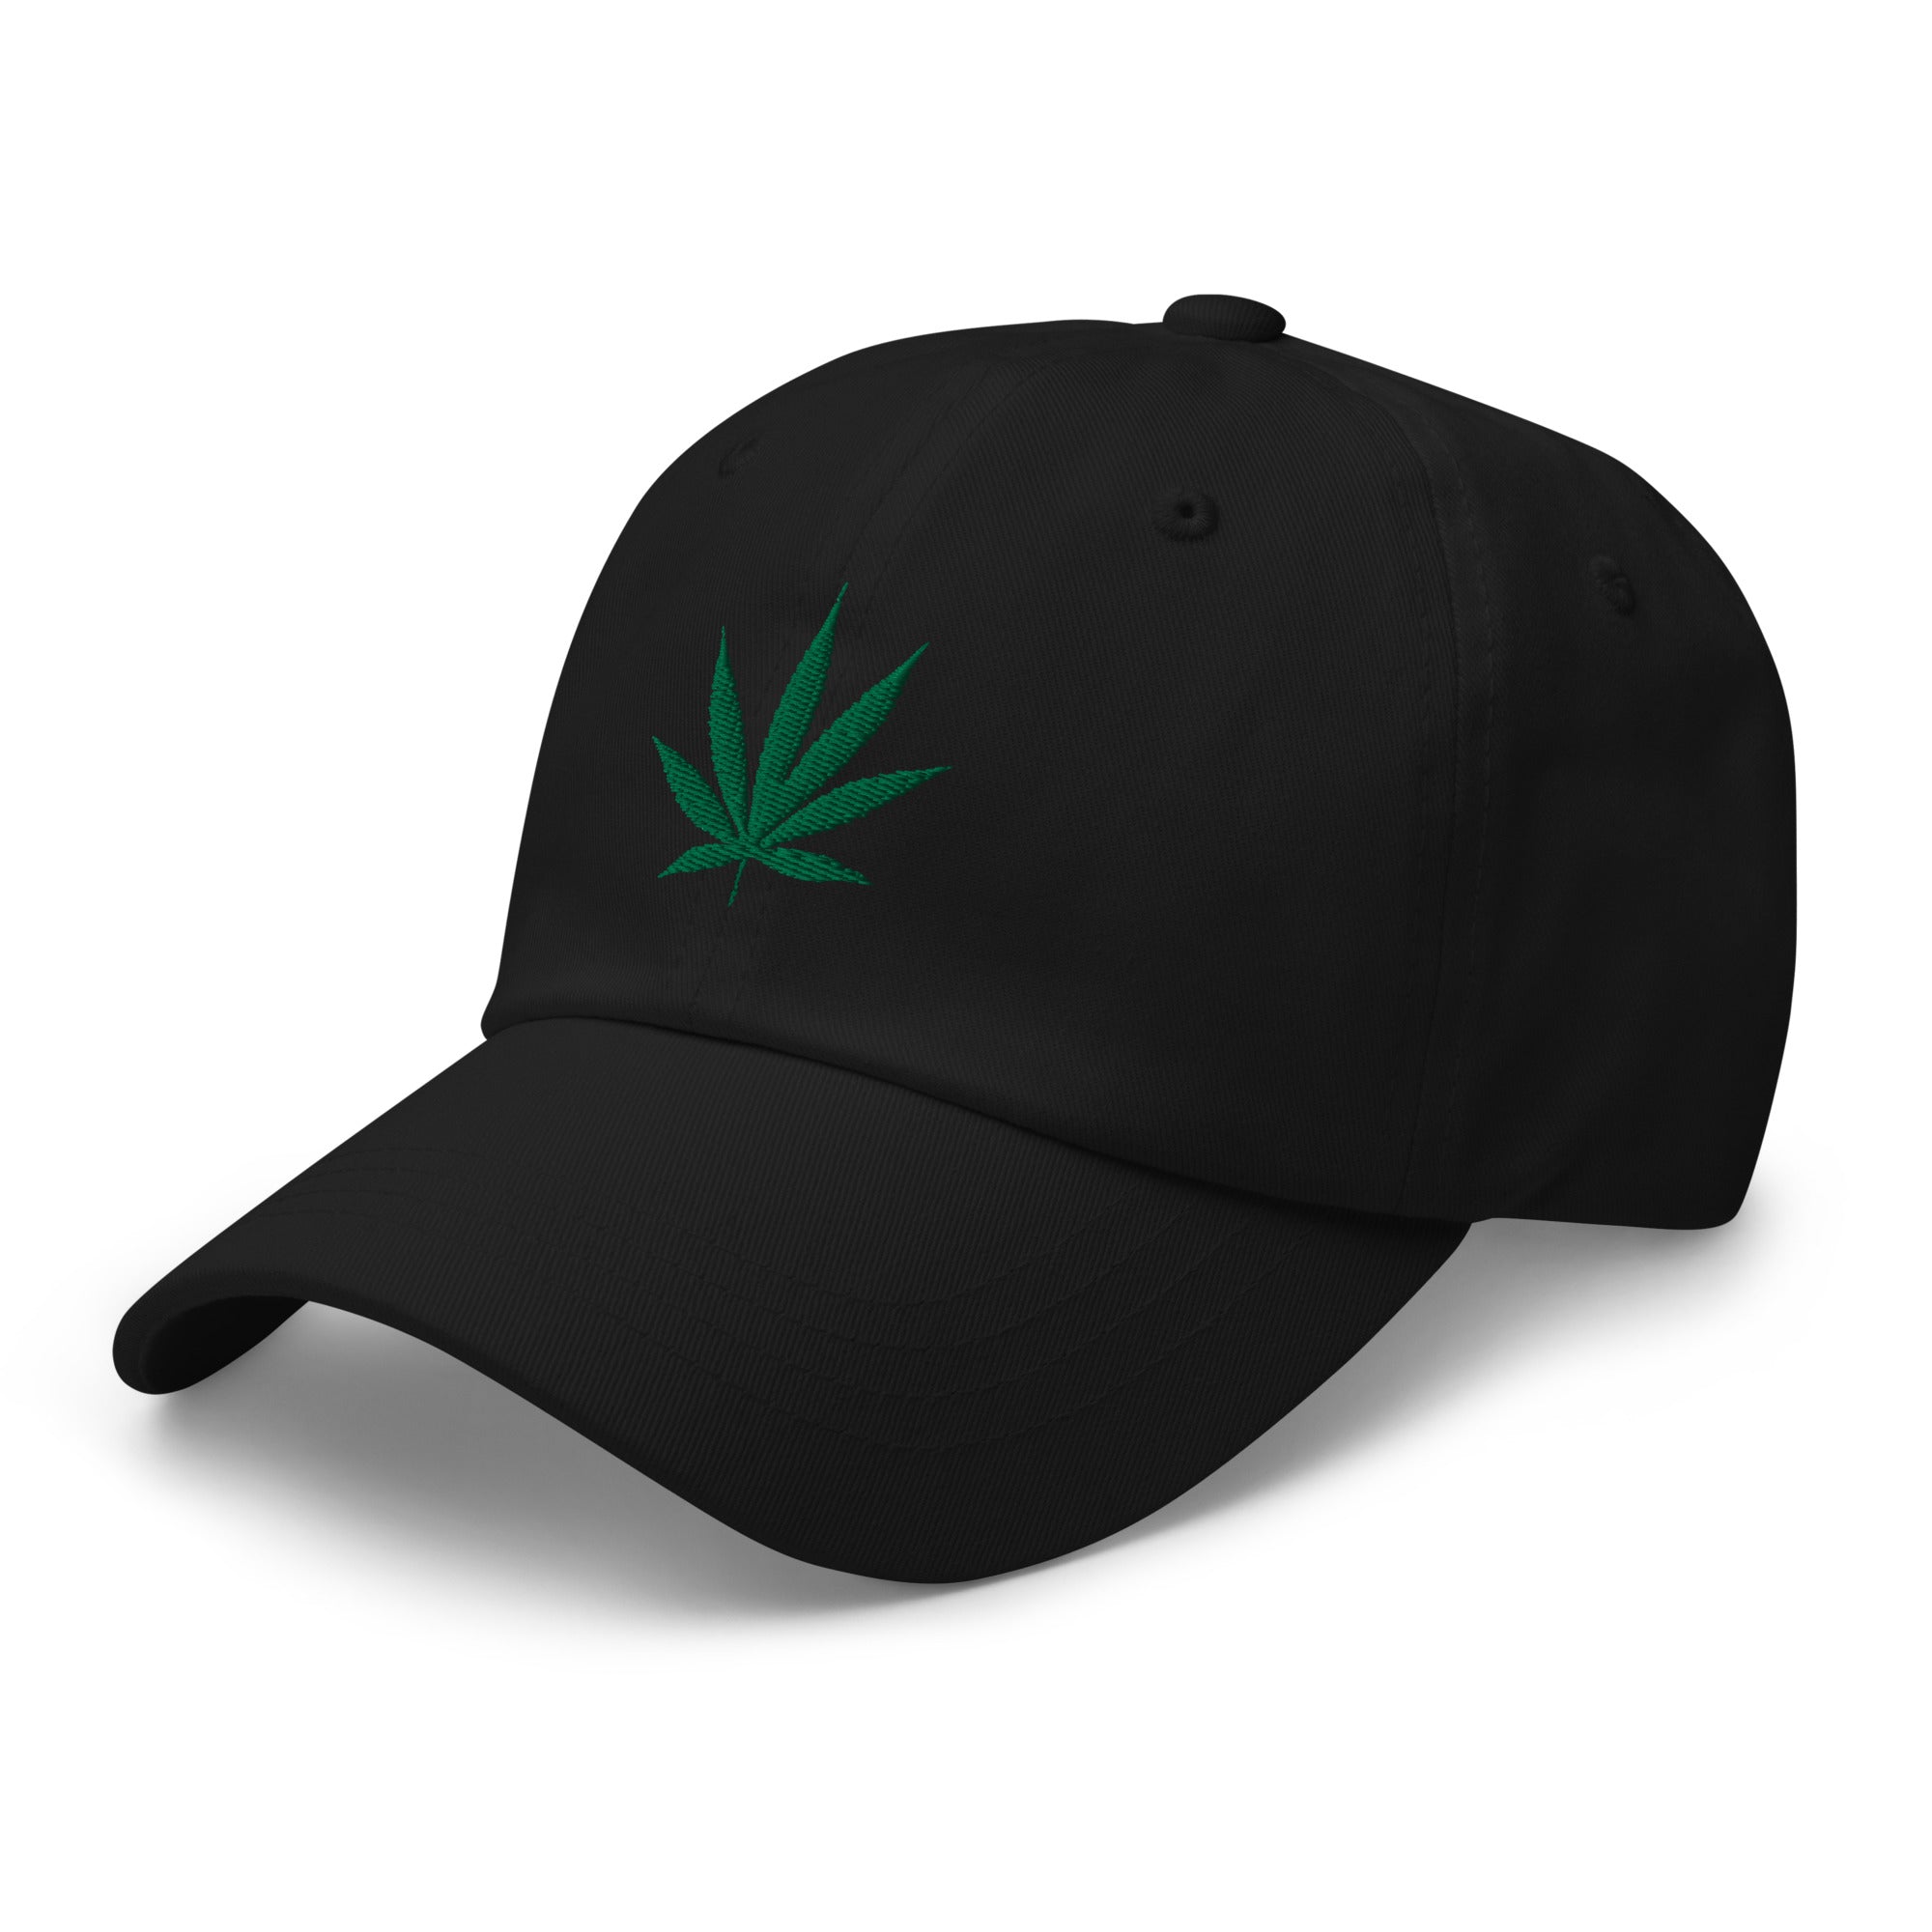 Pot Leaf Marijuana Embroidered Baseball Cap Dad hat - Edge of Life Designs